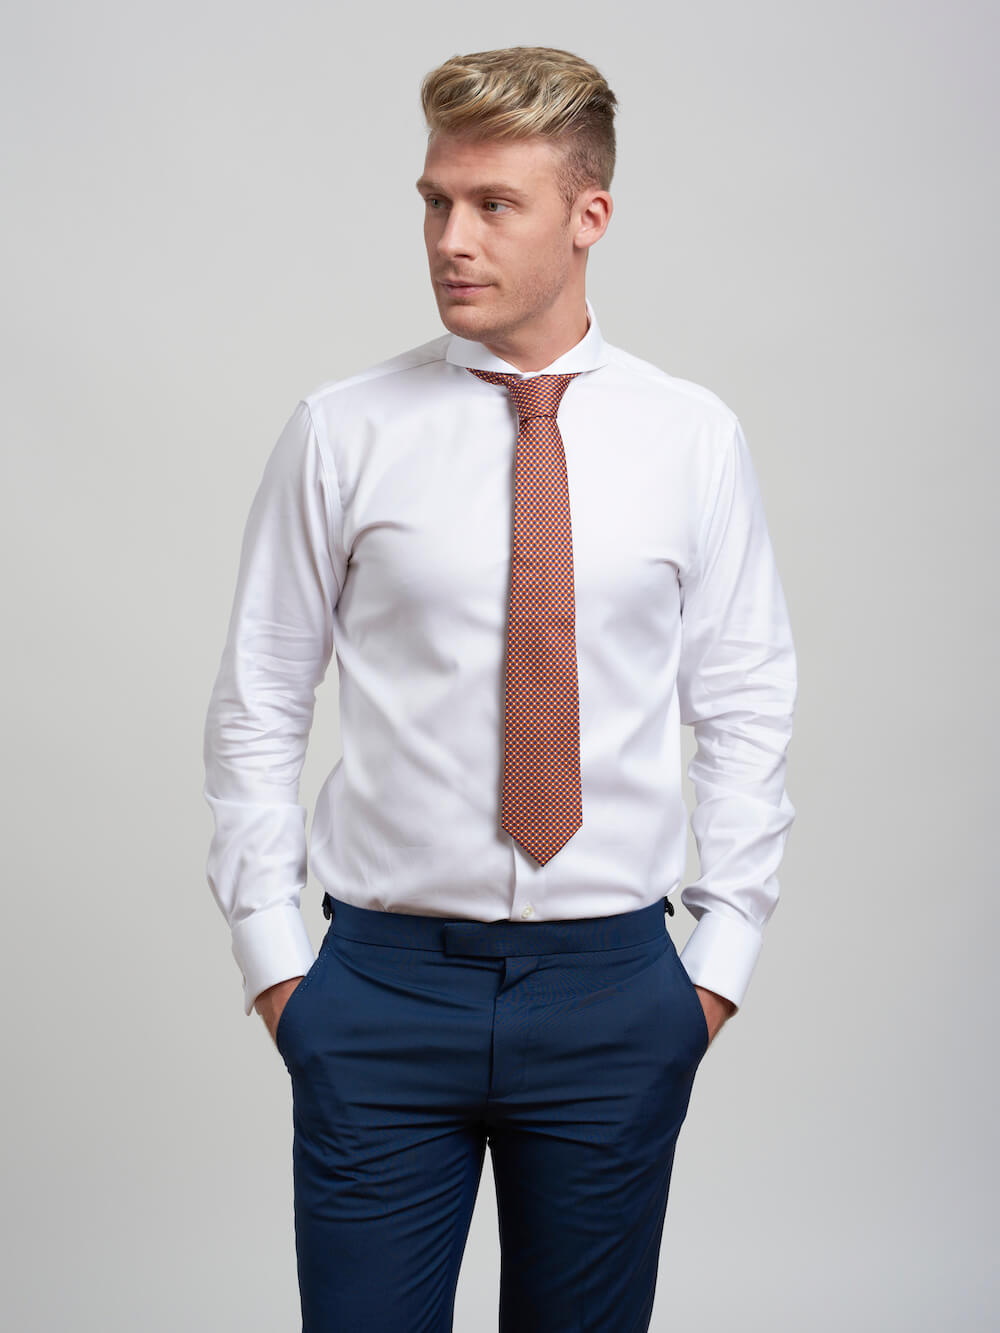 SON Premium Weave Cuff DANDY Extreme Shirt White & - French Cutaway